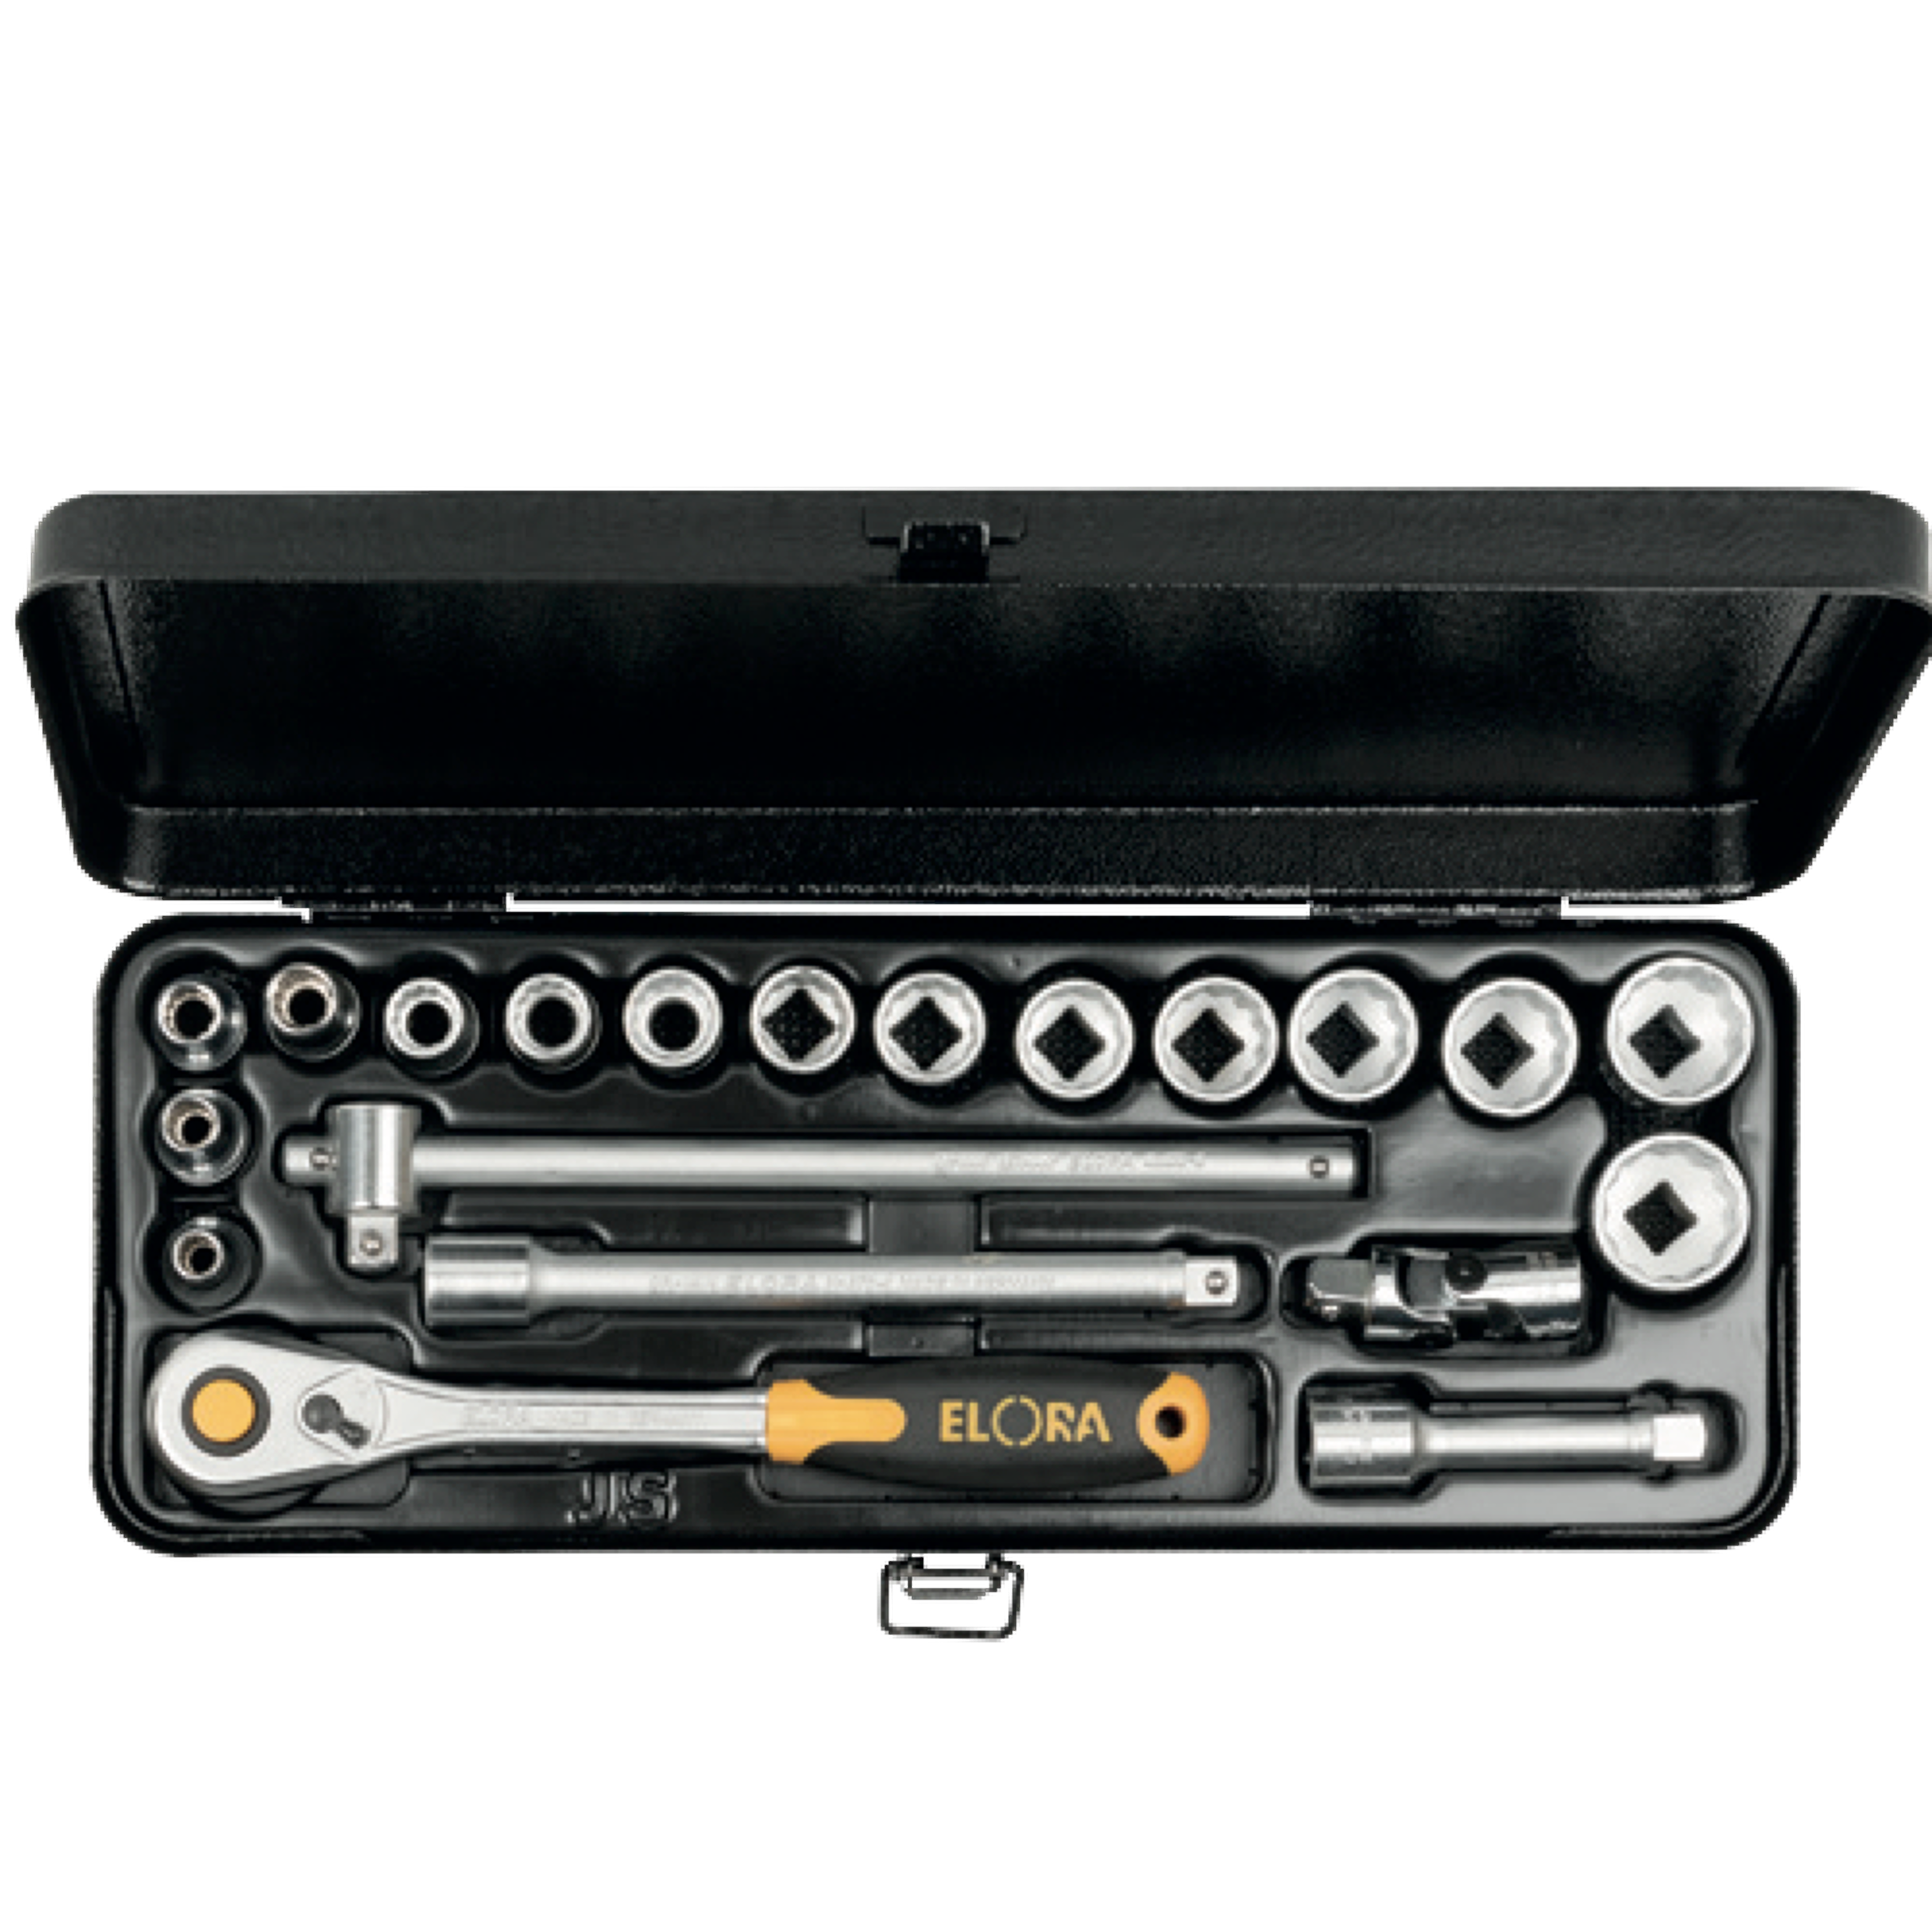 ELORA 871-JSU Socket Set 3/8" (ELORA Tools) - Premium Socket Assortments 3/8" from ELORA - Shop now at Yew Aik.